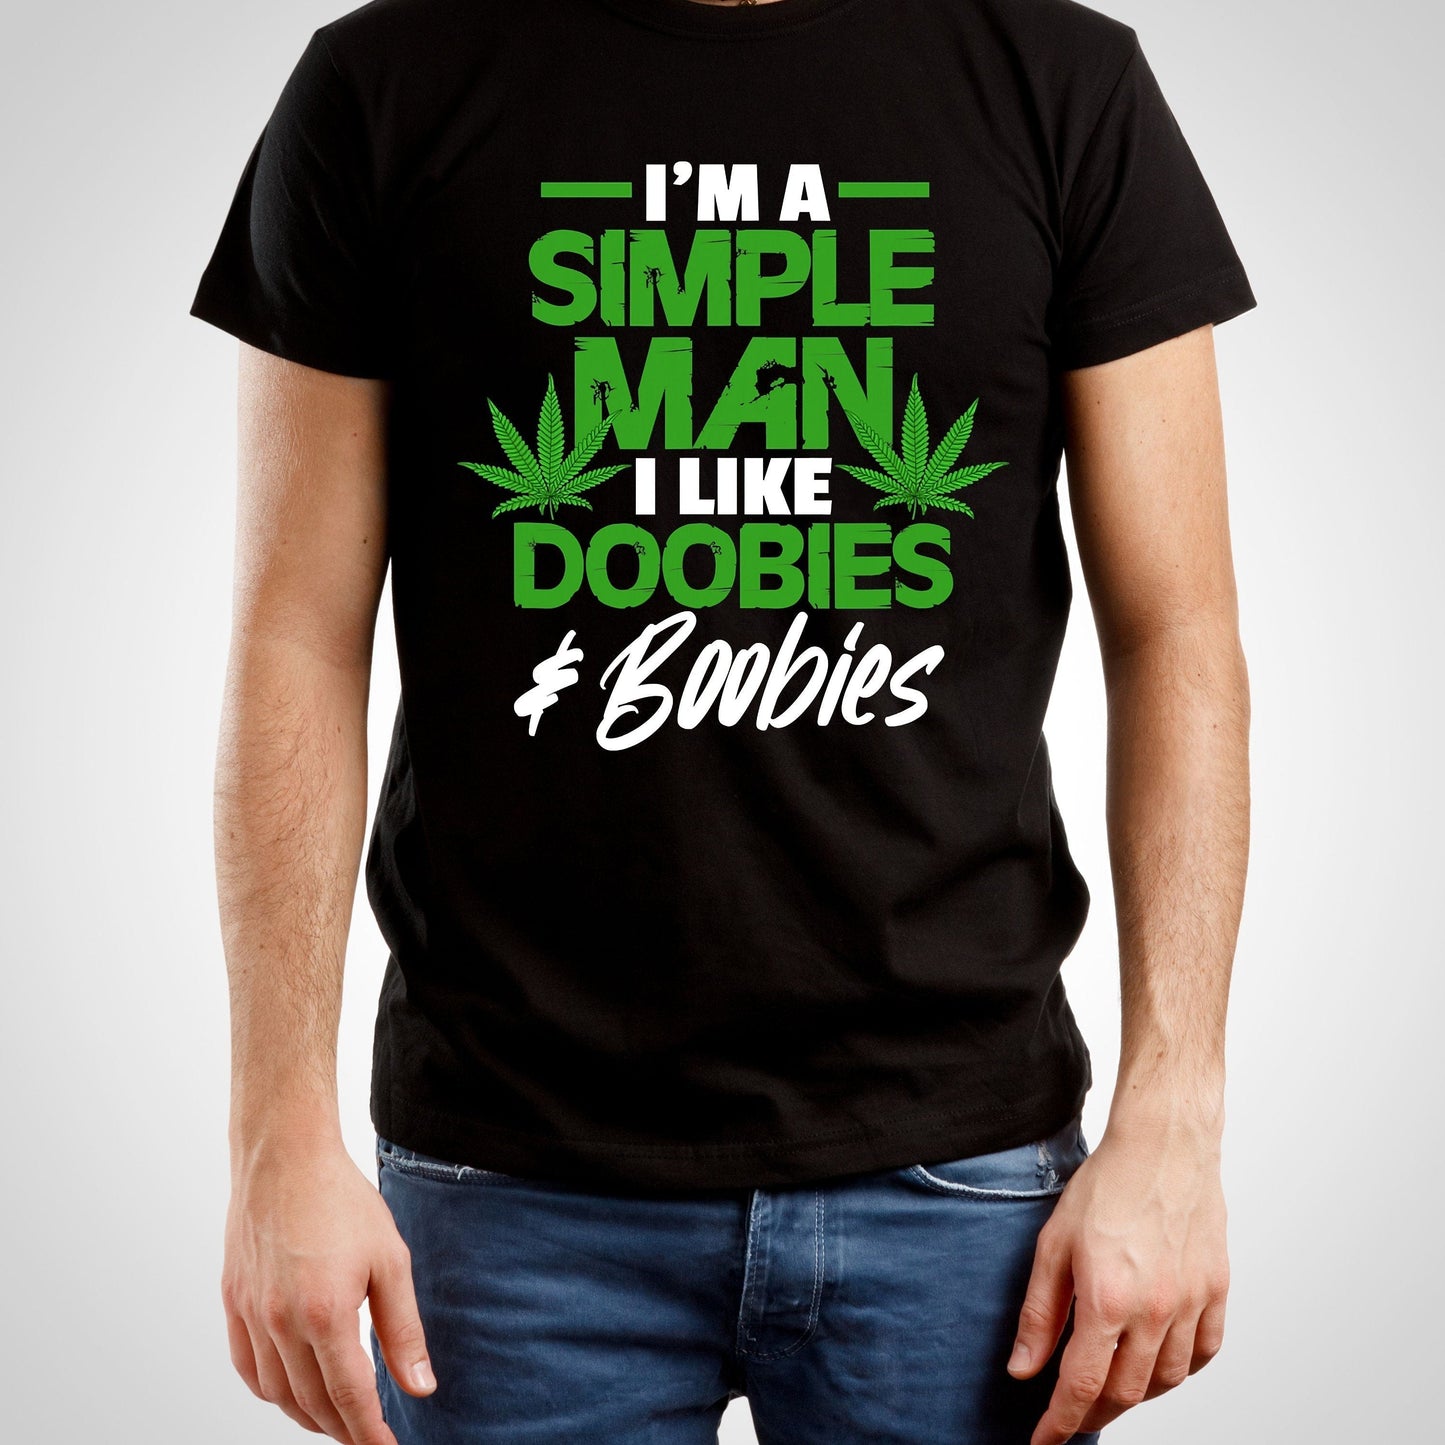 I'm a simple man, I like Doobies and Boobies, Stoner Shirt for Him